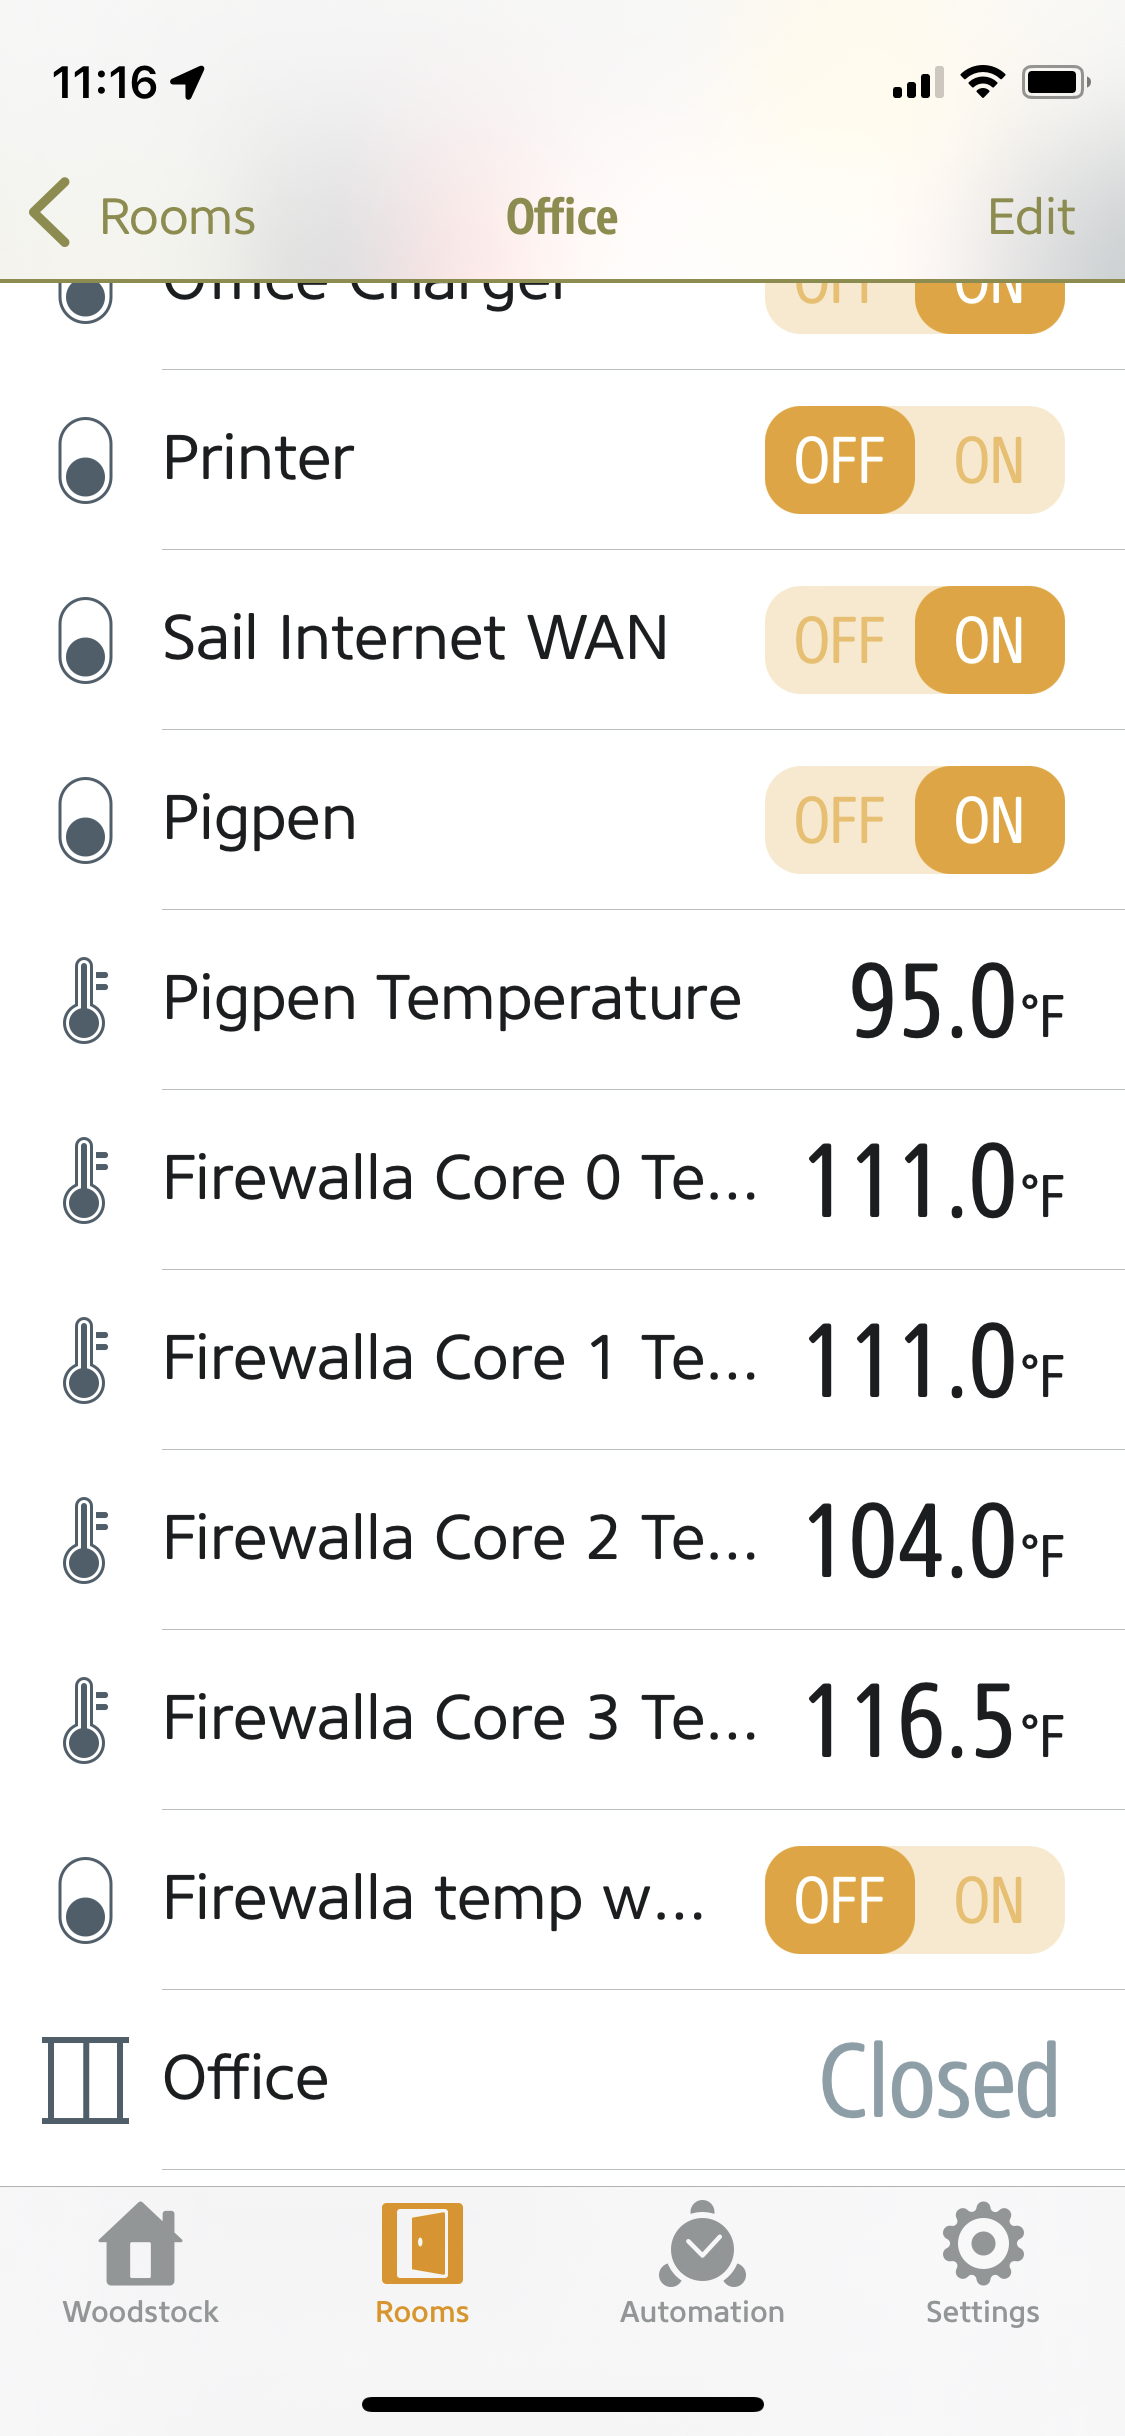 Example Firewalla CPU Temperatures in Homekit